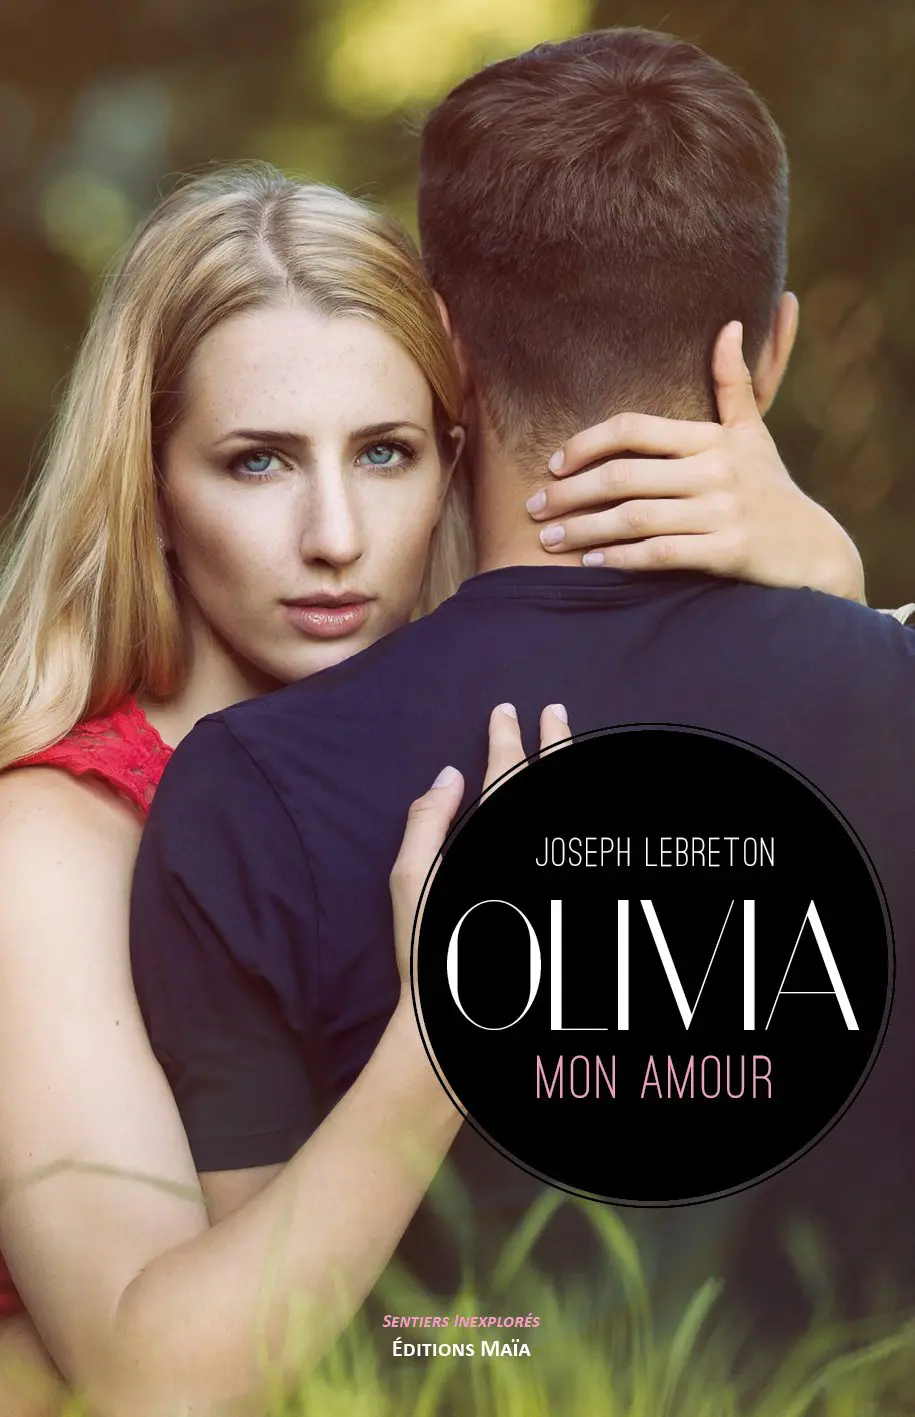 Entretien avec Joseph Lebreton – Olivia mon amour